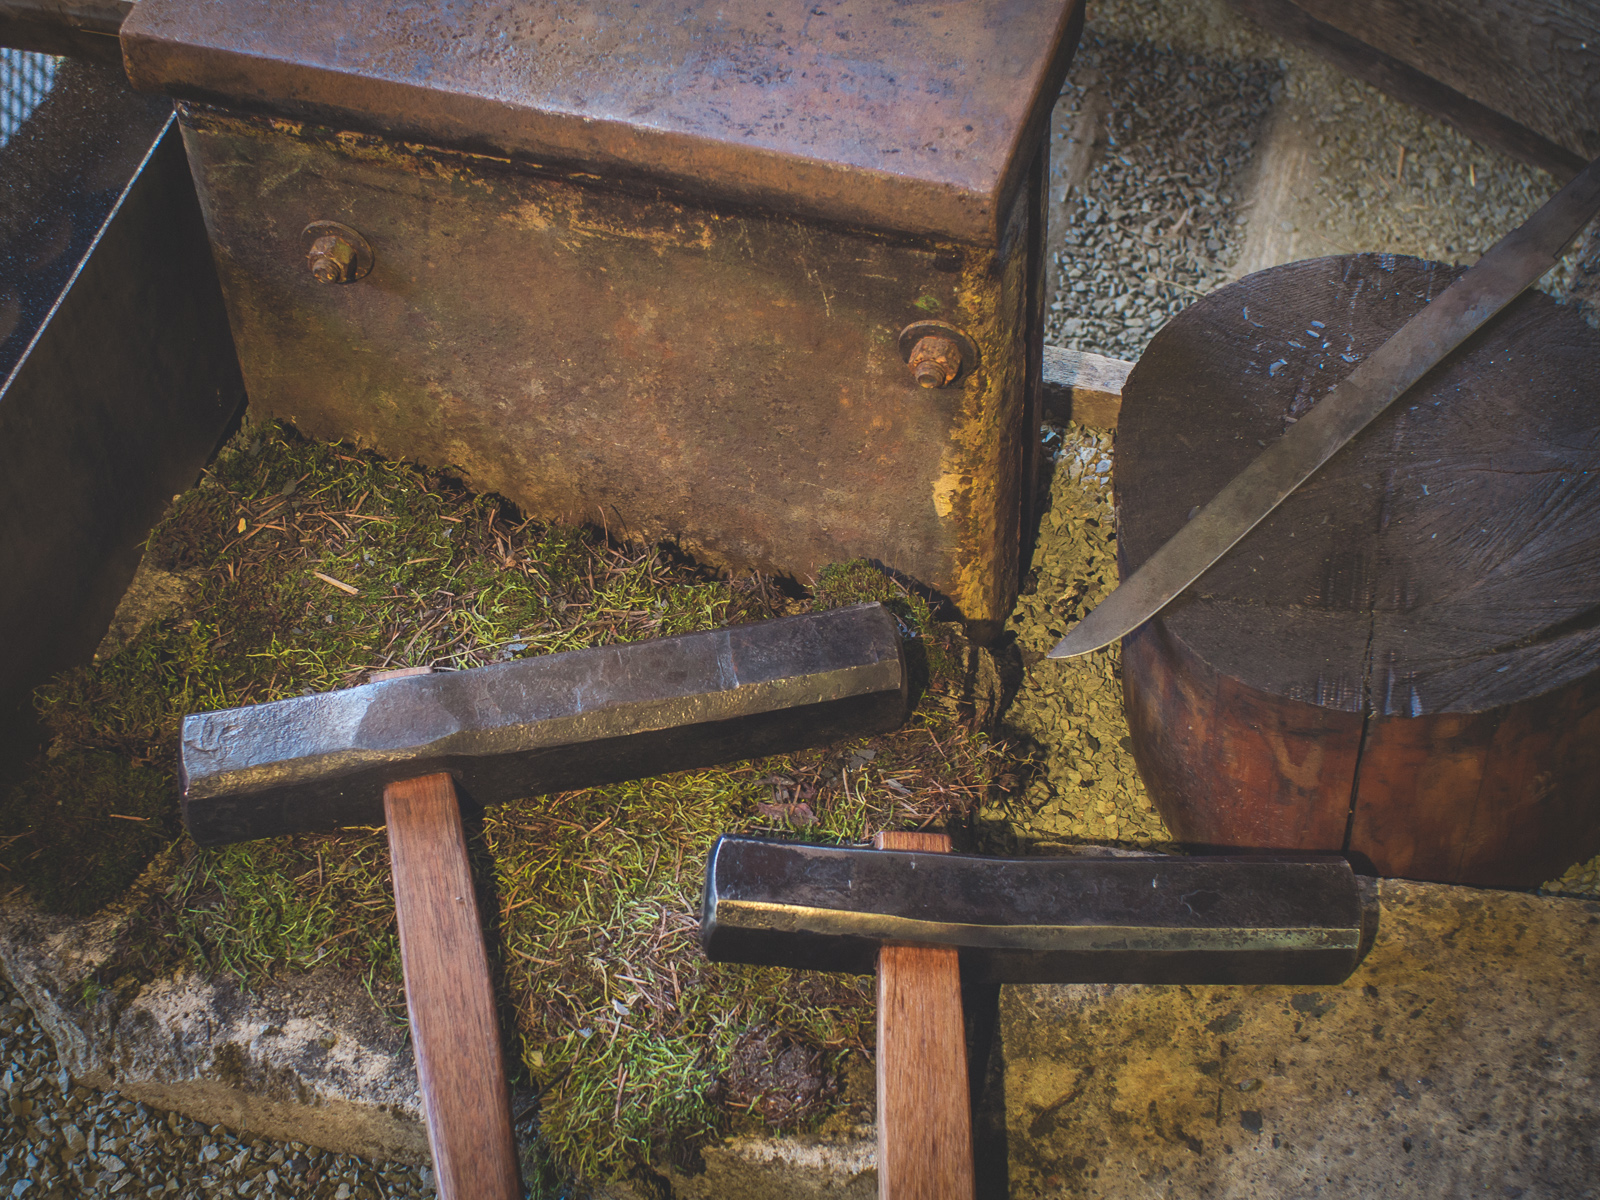 Mukozuchi: Japanese swordsmith's sledge hammer.